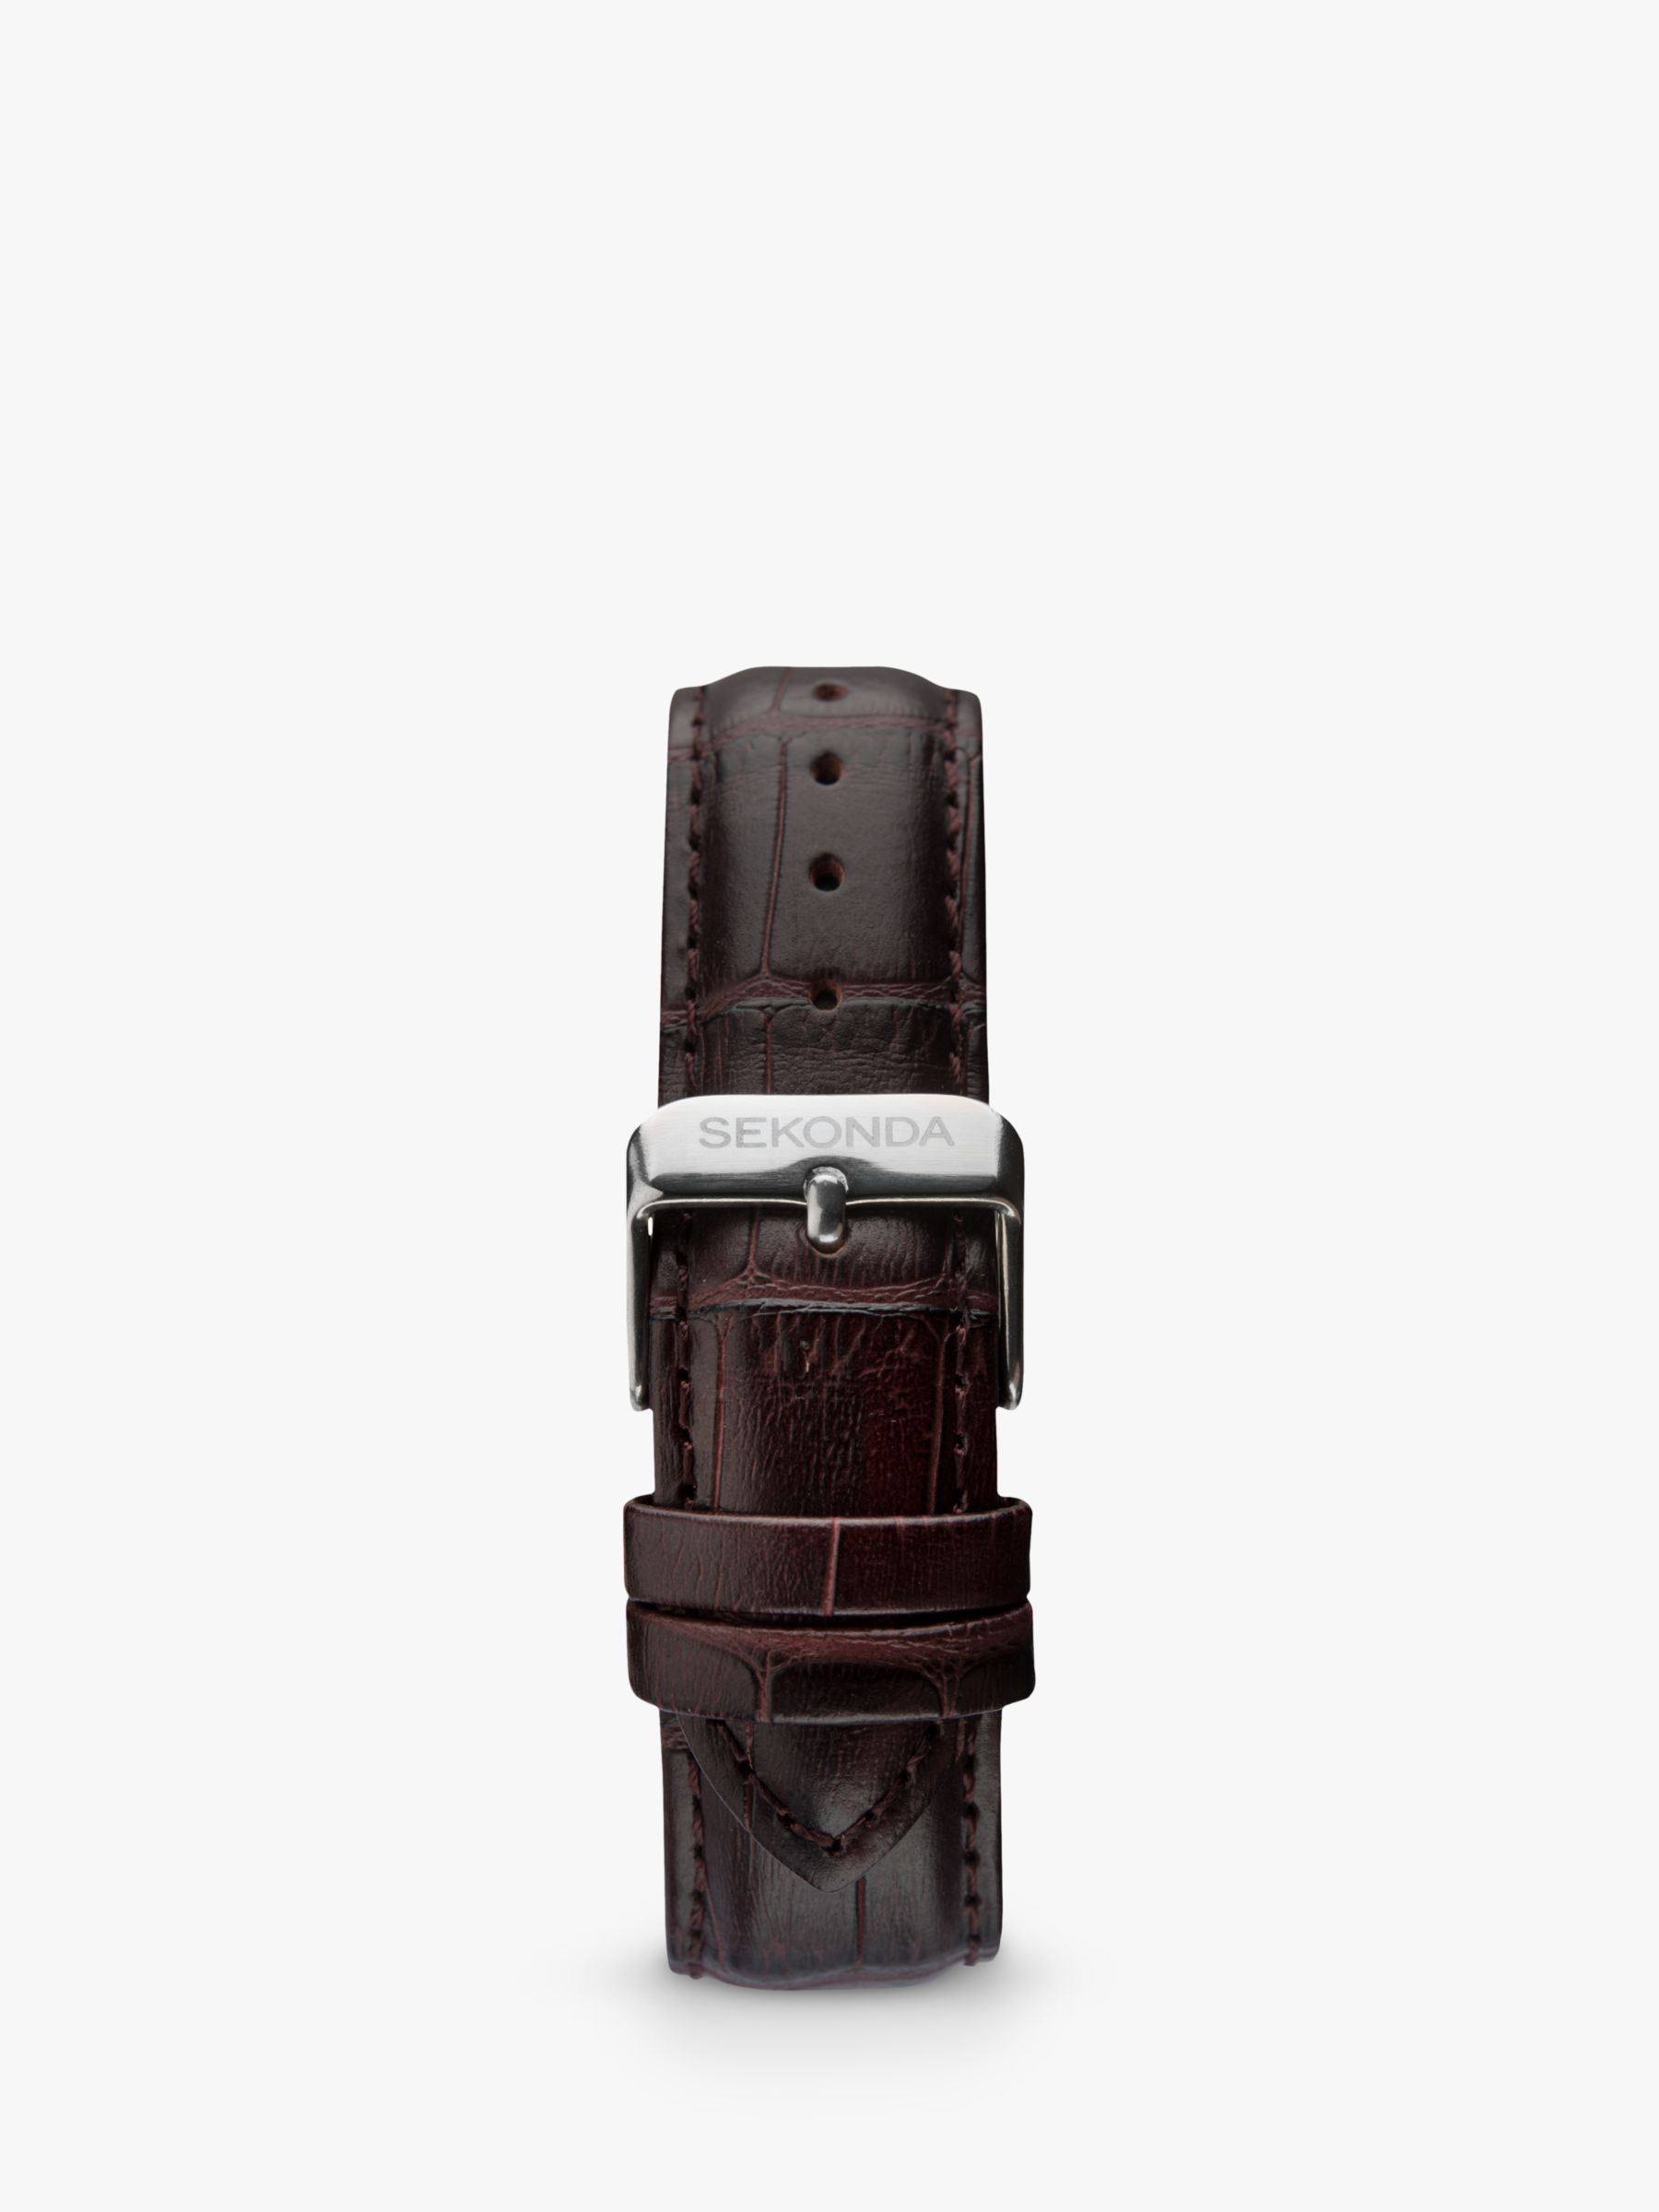 Sekonda Men's Day Date Leather Strap Watch, Brown/Dark Blue 1662